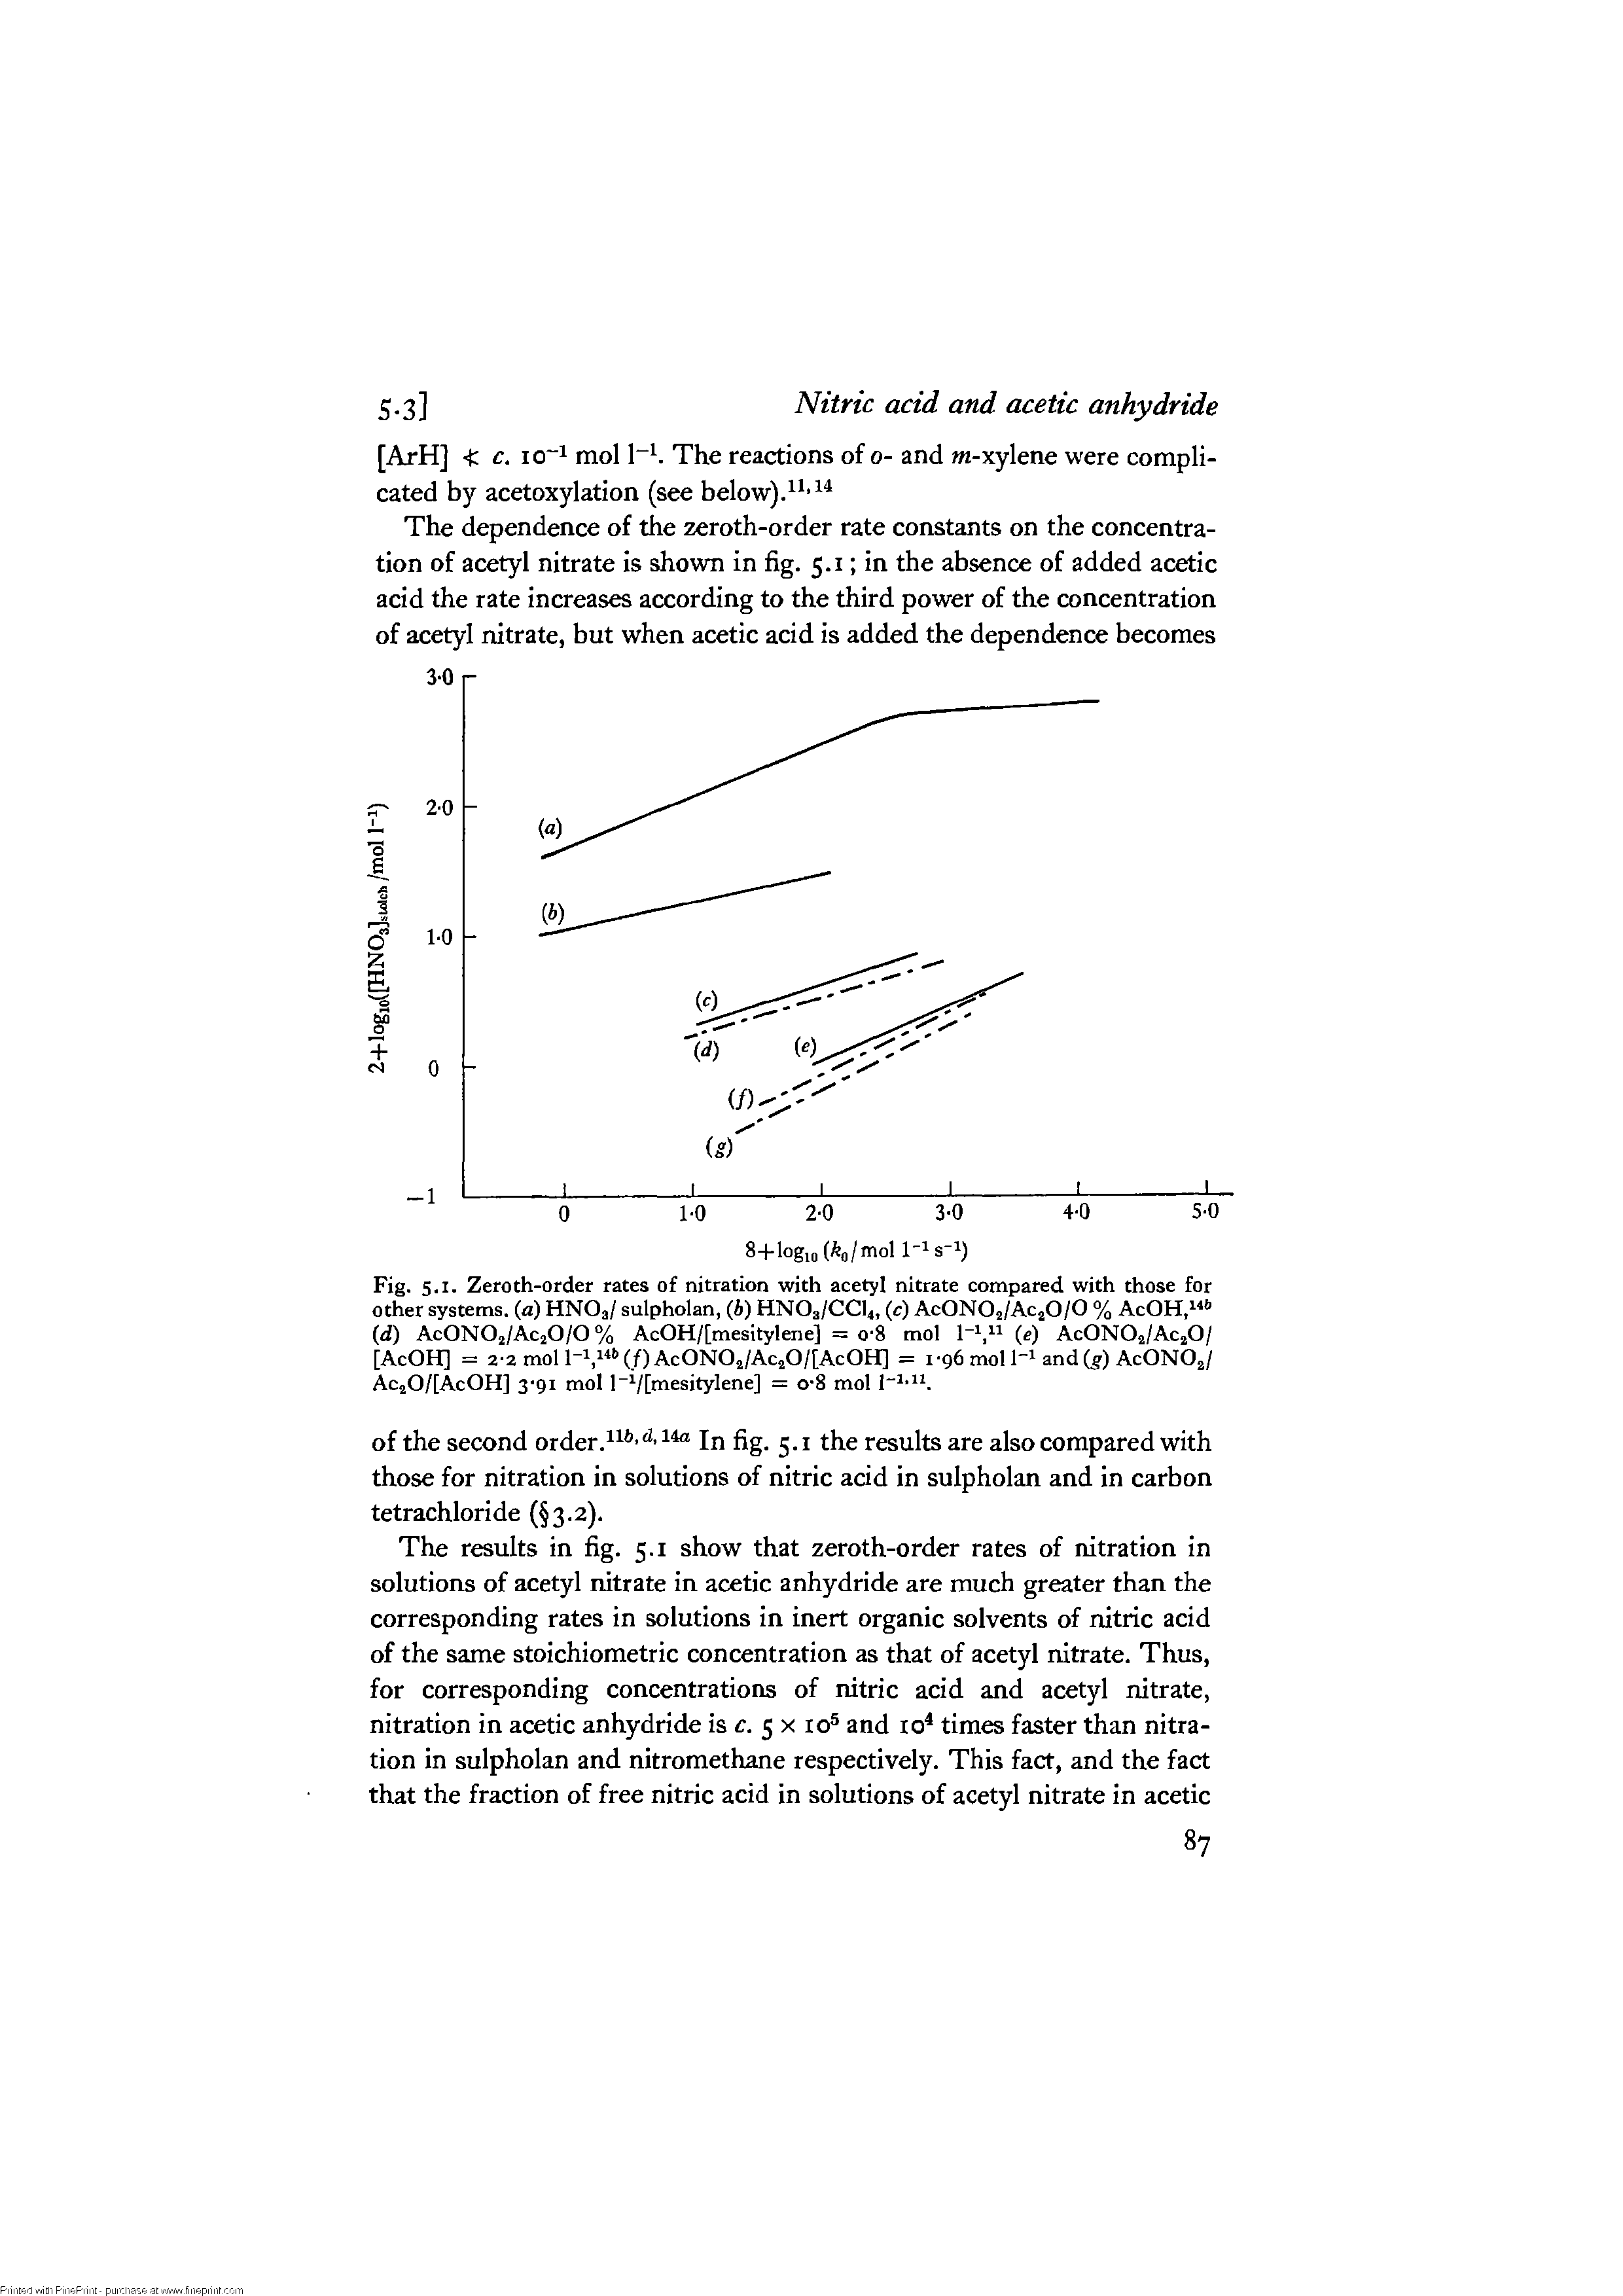 Fig. 5.1. Zeroth-order rates of nitration with acetyl nitrate compared with those for other systems, (a) HNOa/ sulpholan, (i) HNO3/CCI4, (c) AcONOj/AcjO/O % AcOH, (d) AcONOj/AcaO/O % AcOH/[mesitylene] = o-8 mol l-i,n (e) AcONOj/AcaO/ [AcOH] = 2-2moll-i,ii >(/)AcONOa/AcaO/[AcOH] = 1-96 mol l-i and (g) AcONOa/ AcaO/[AcOH] 3 9i mol l-i/[mesitylene] = o-8 mol 1-i H.